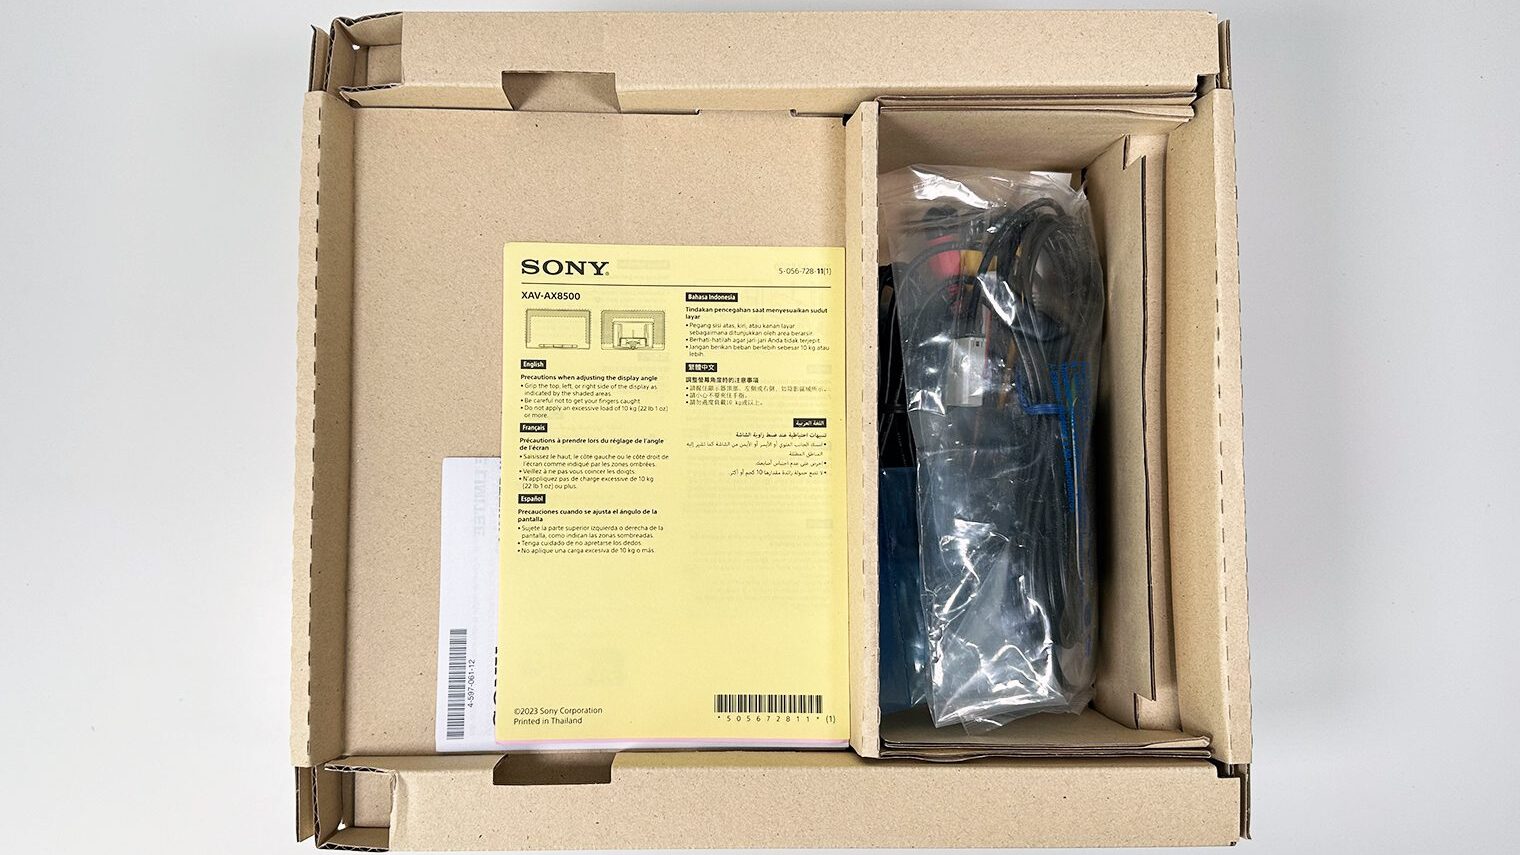 Sony XAV-AX8500 in box manuals in front